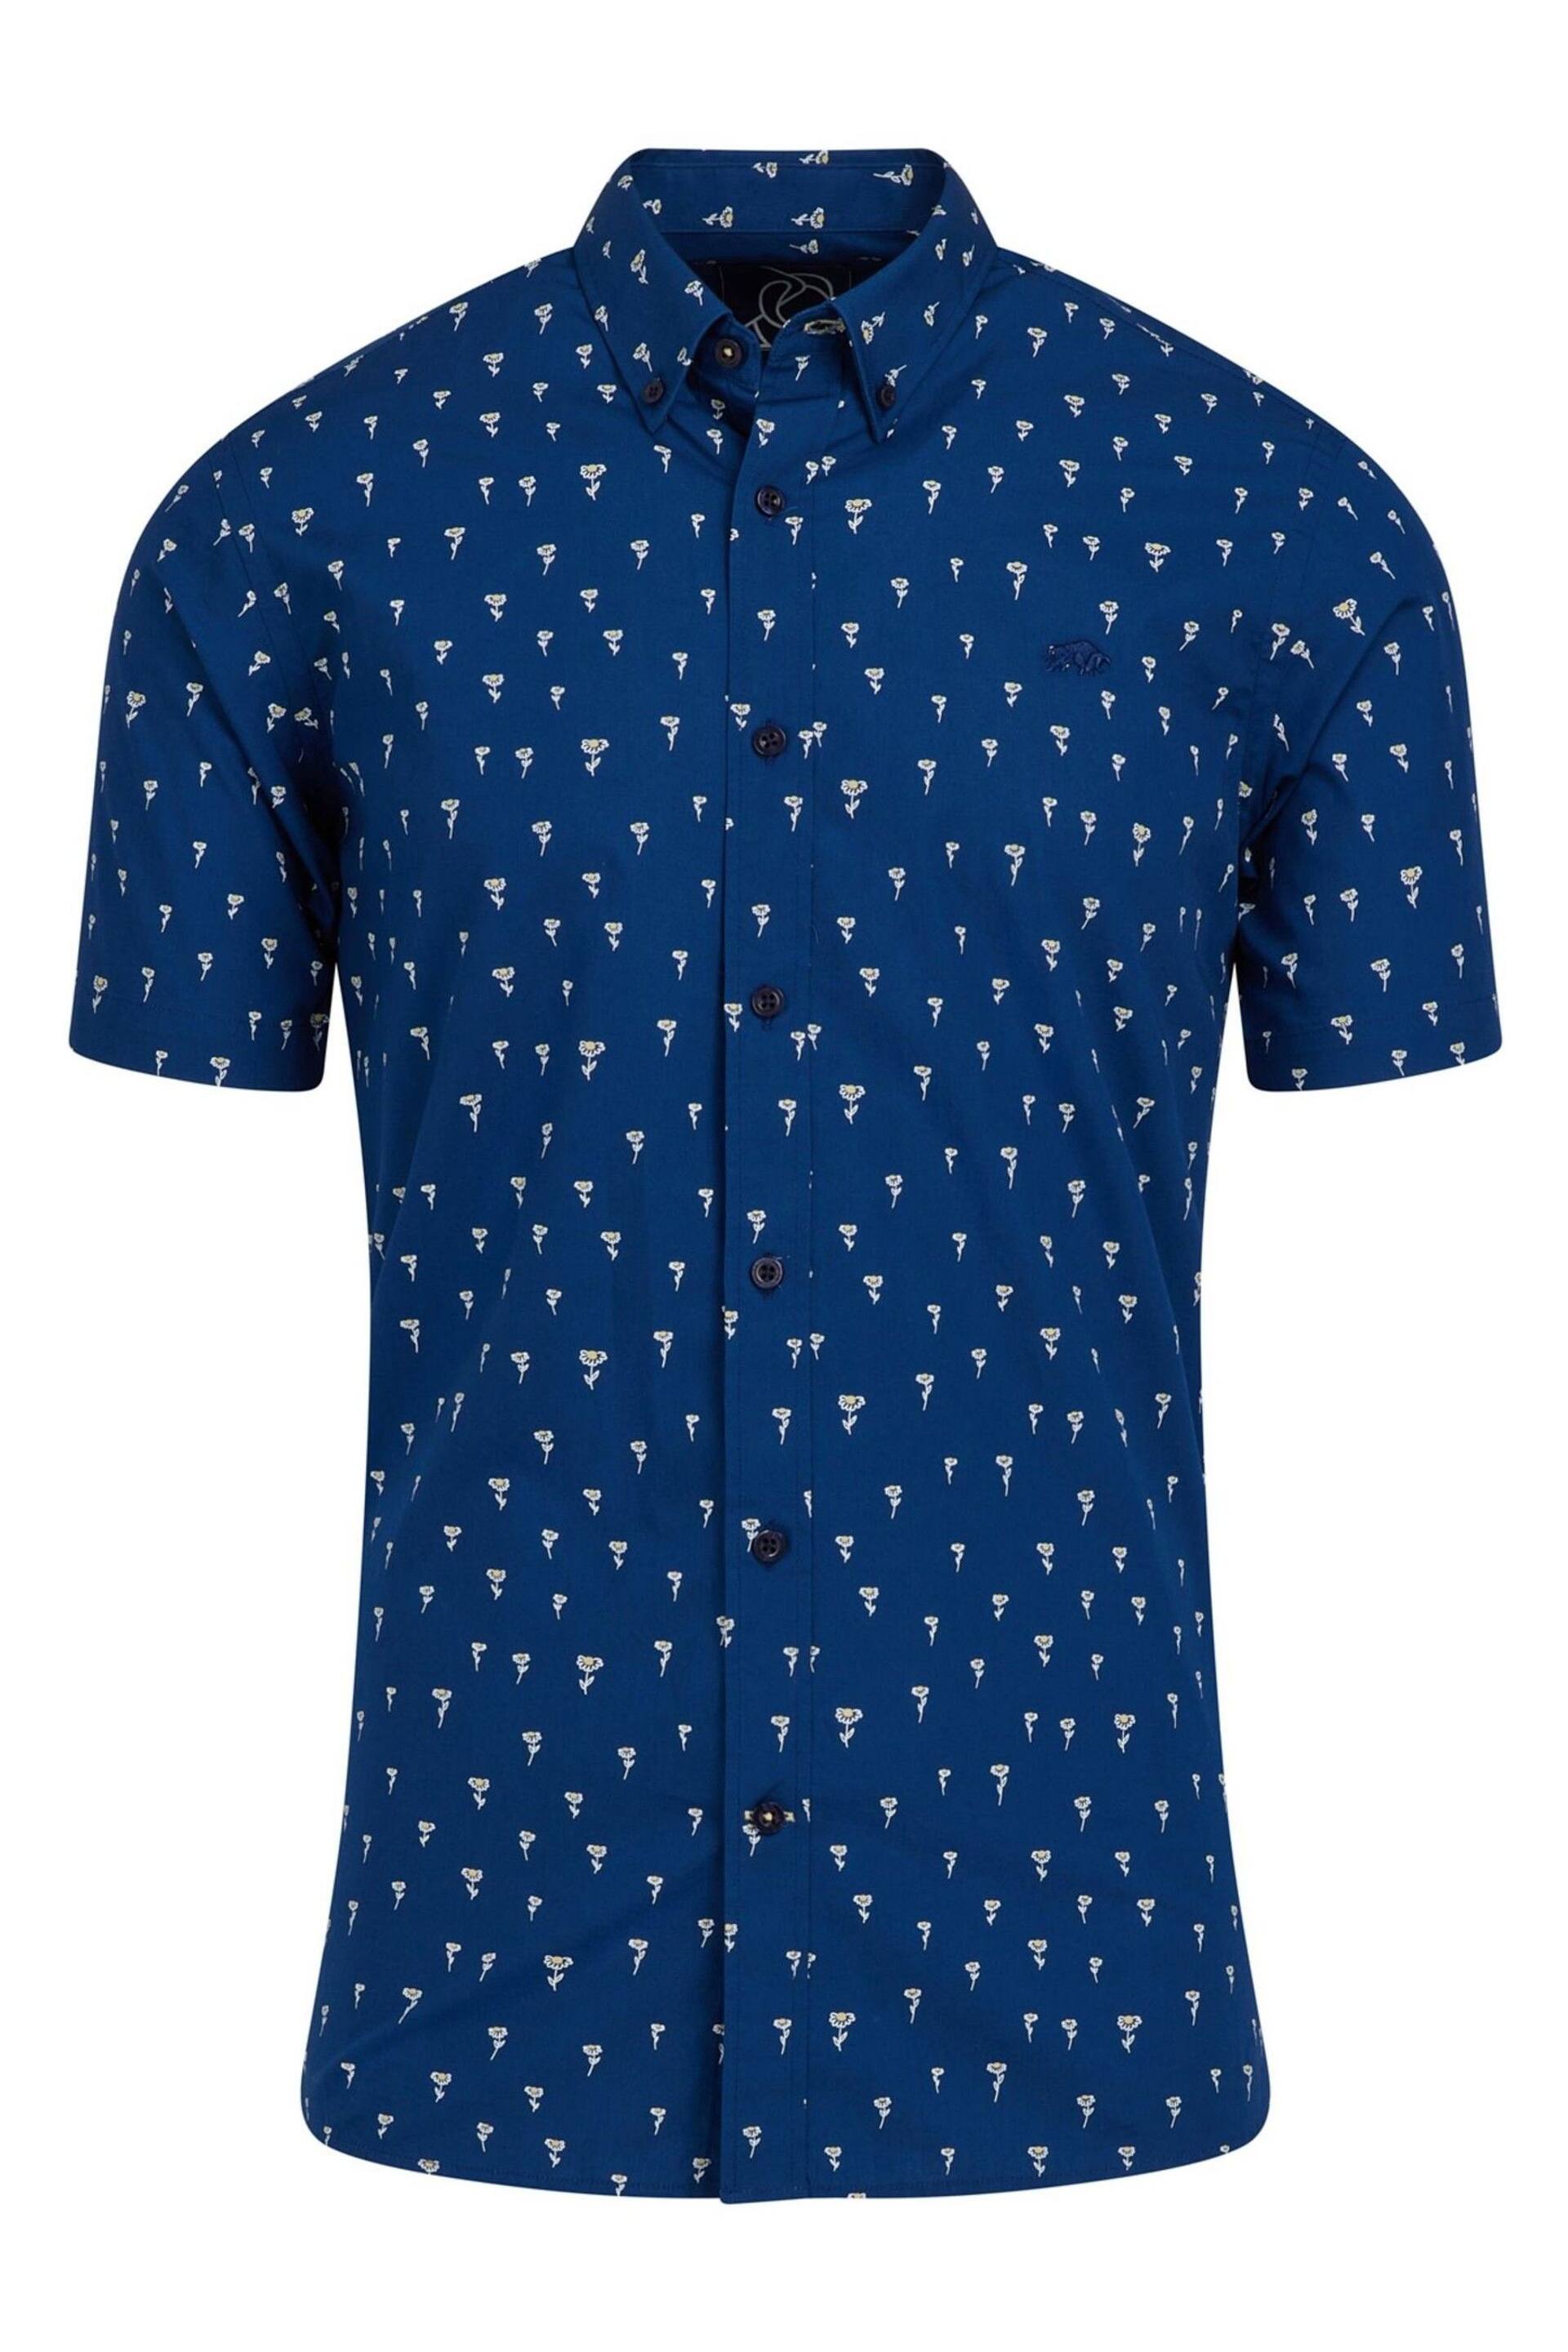 Raging Bull Blue Short Sleeve Daisy Print Poplin Shirt - Image 8 of 8